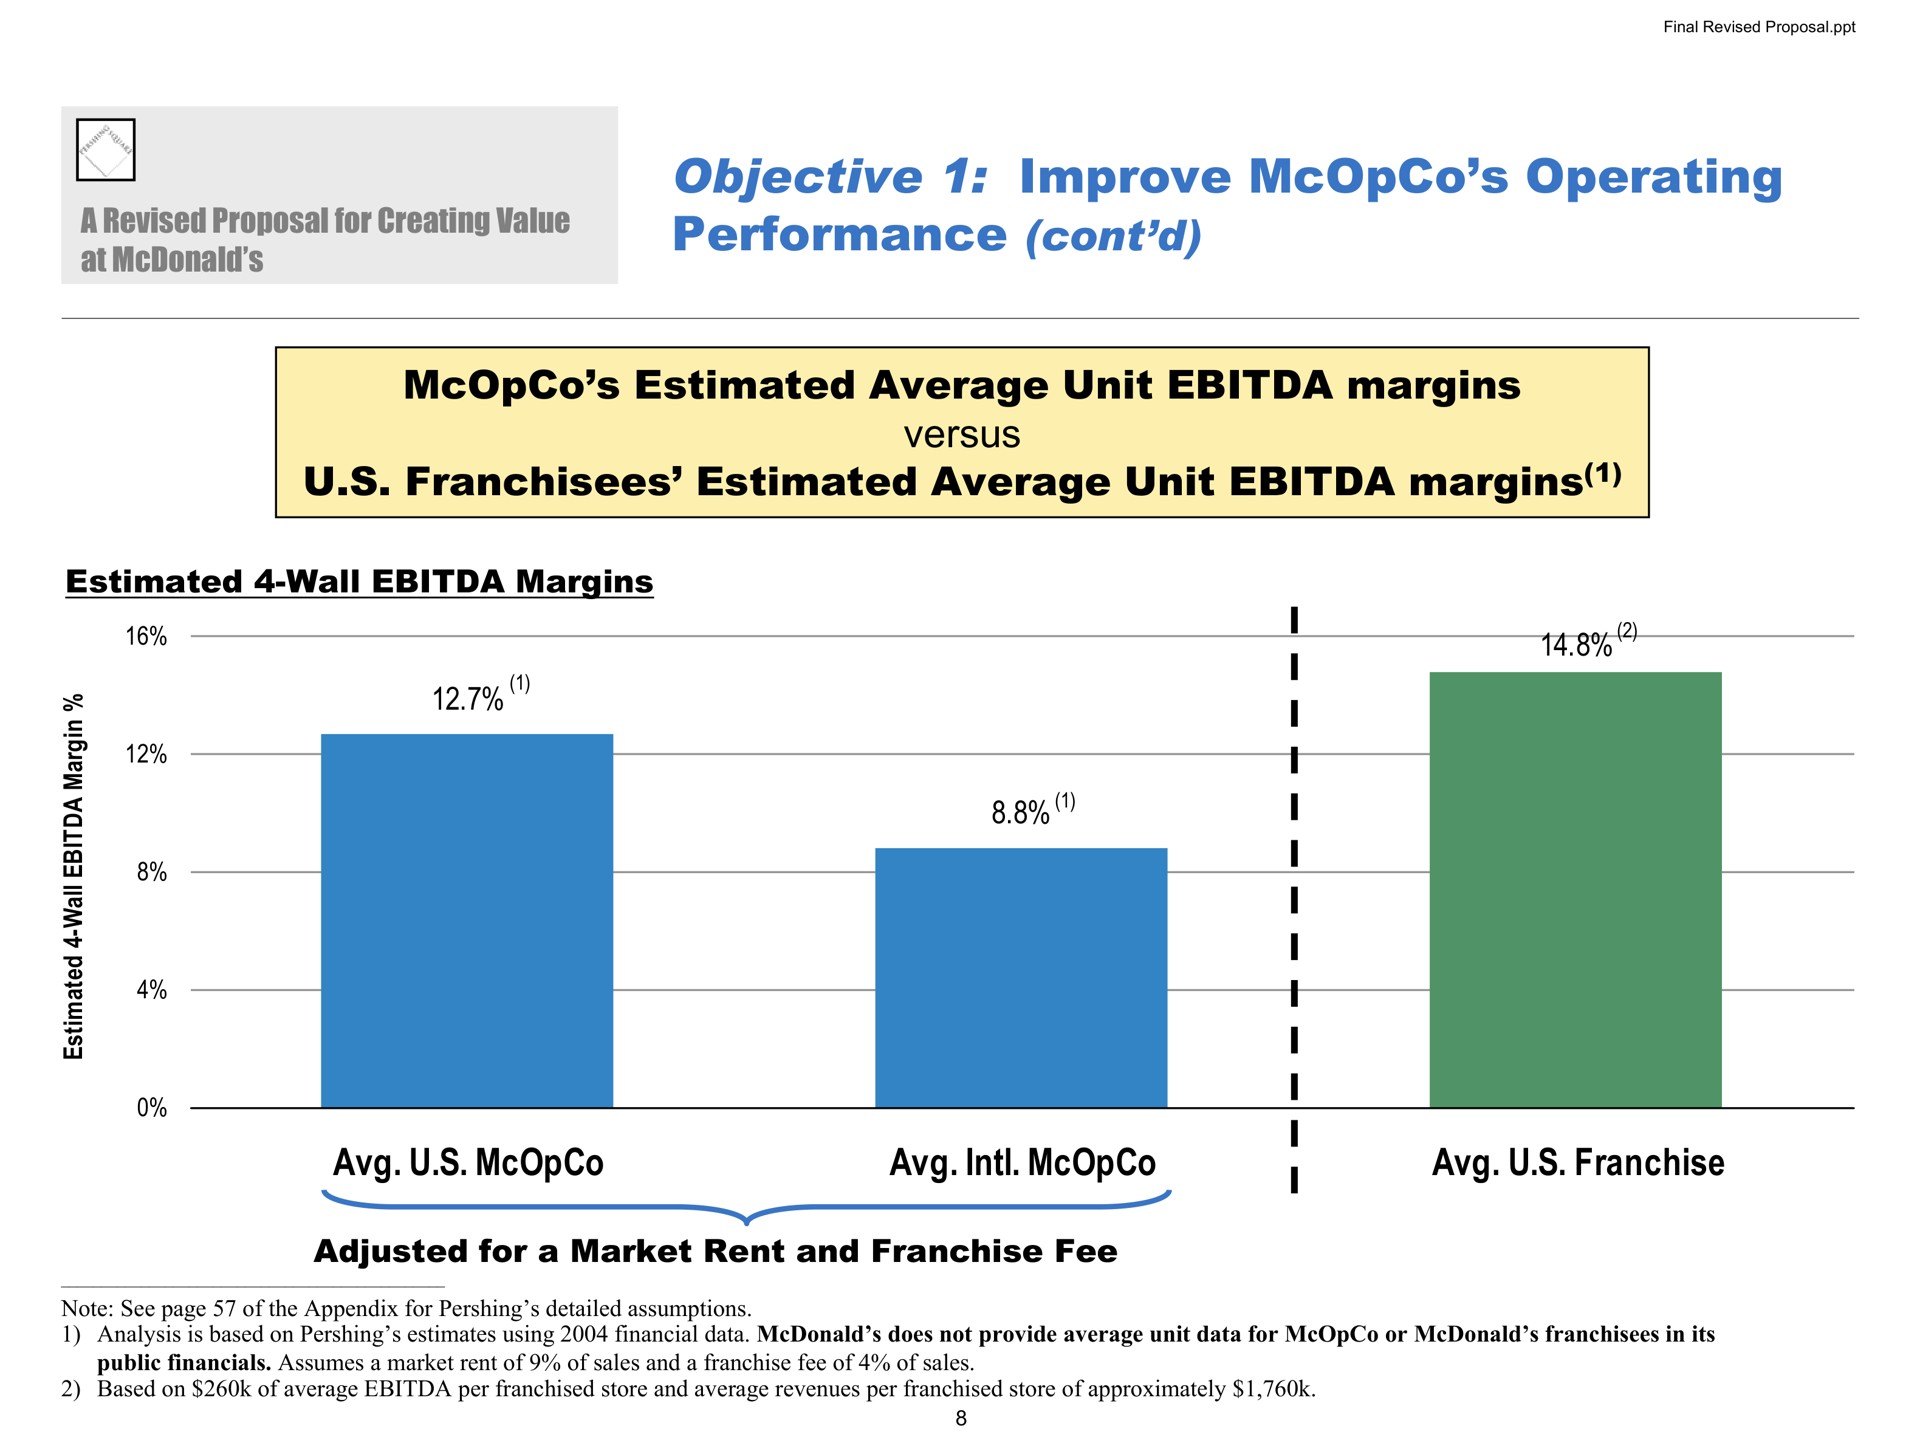 objective improve operating performance estimated average unit margins versus franchisees estimated average unit margins franchise | Pershing Square